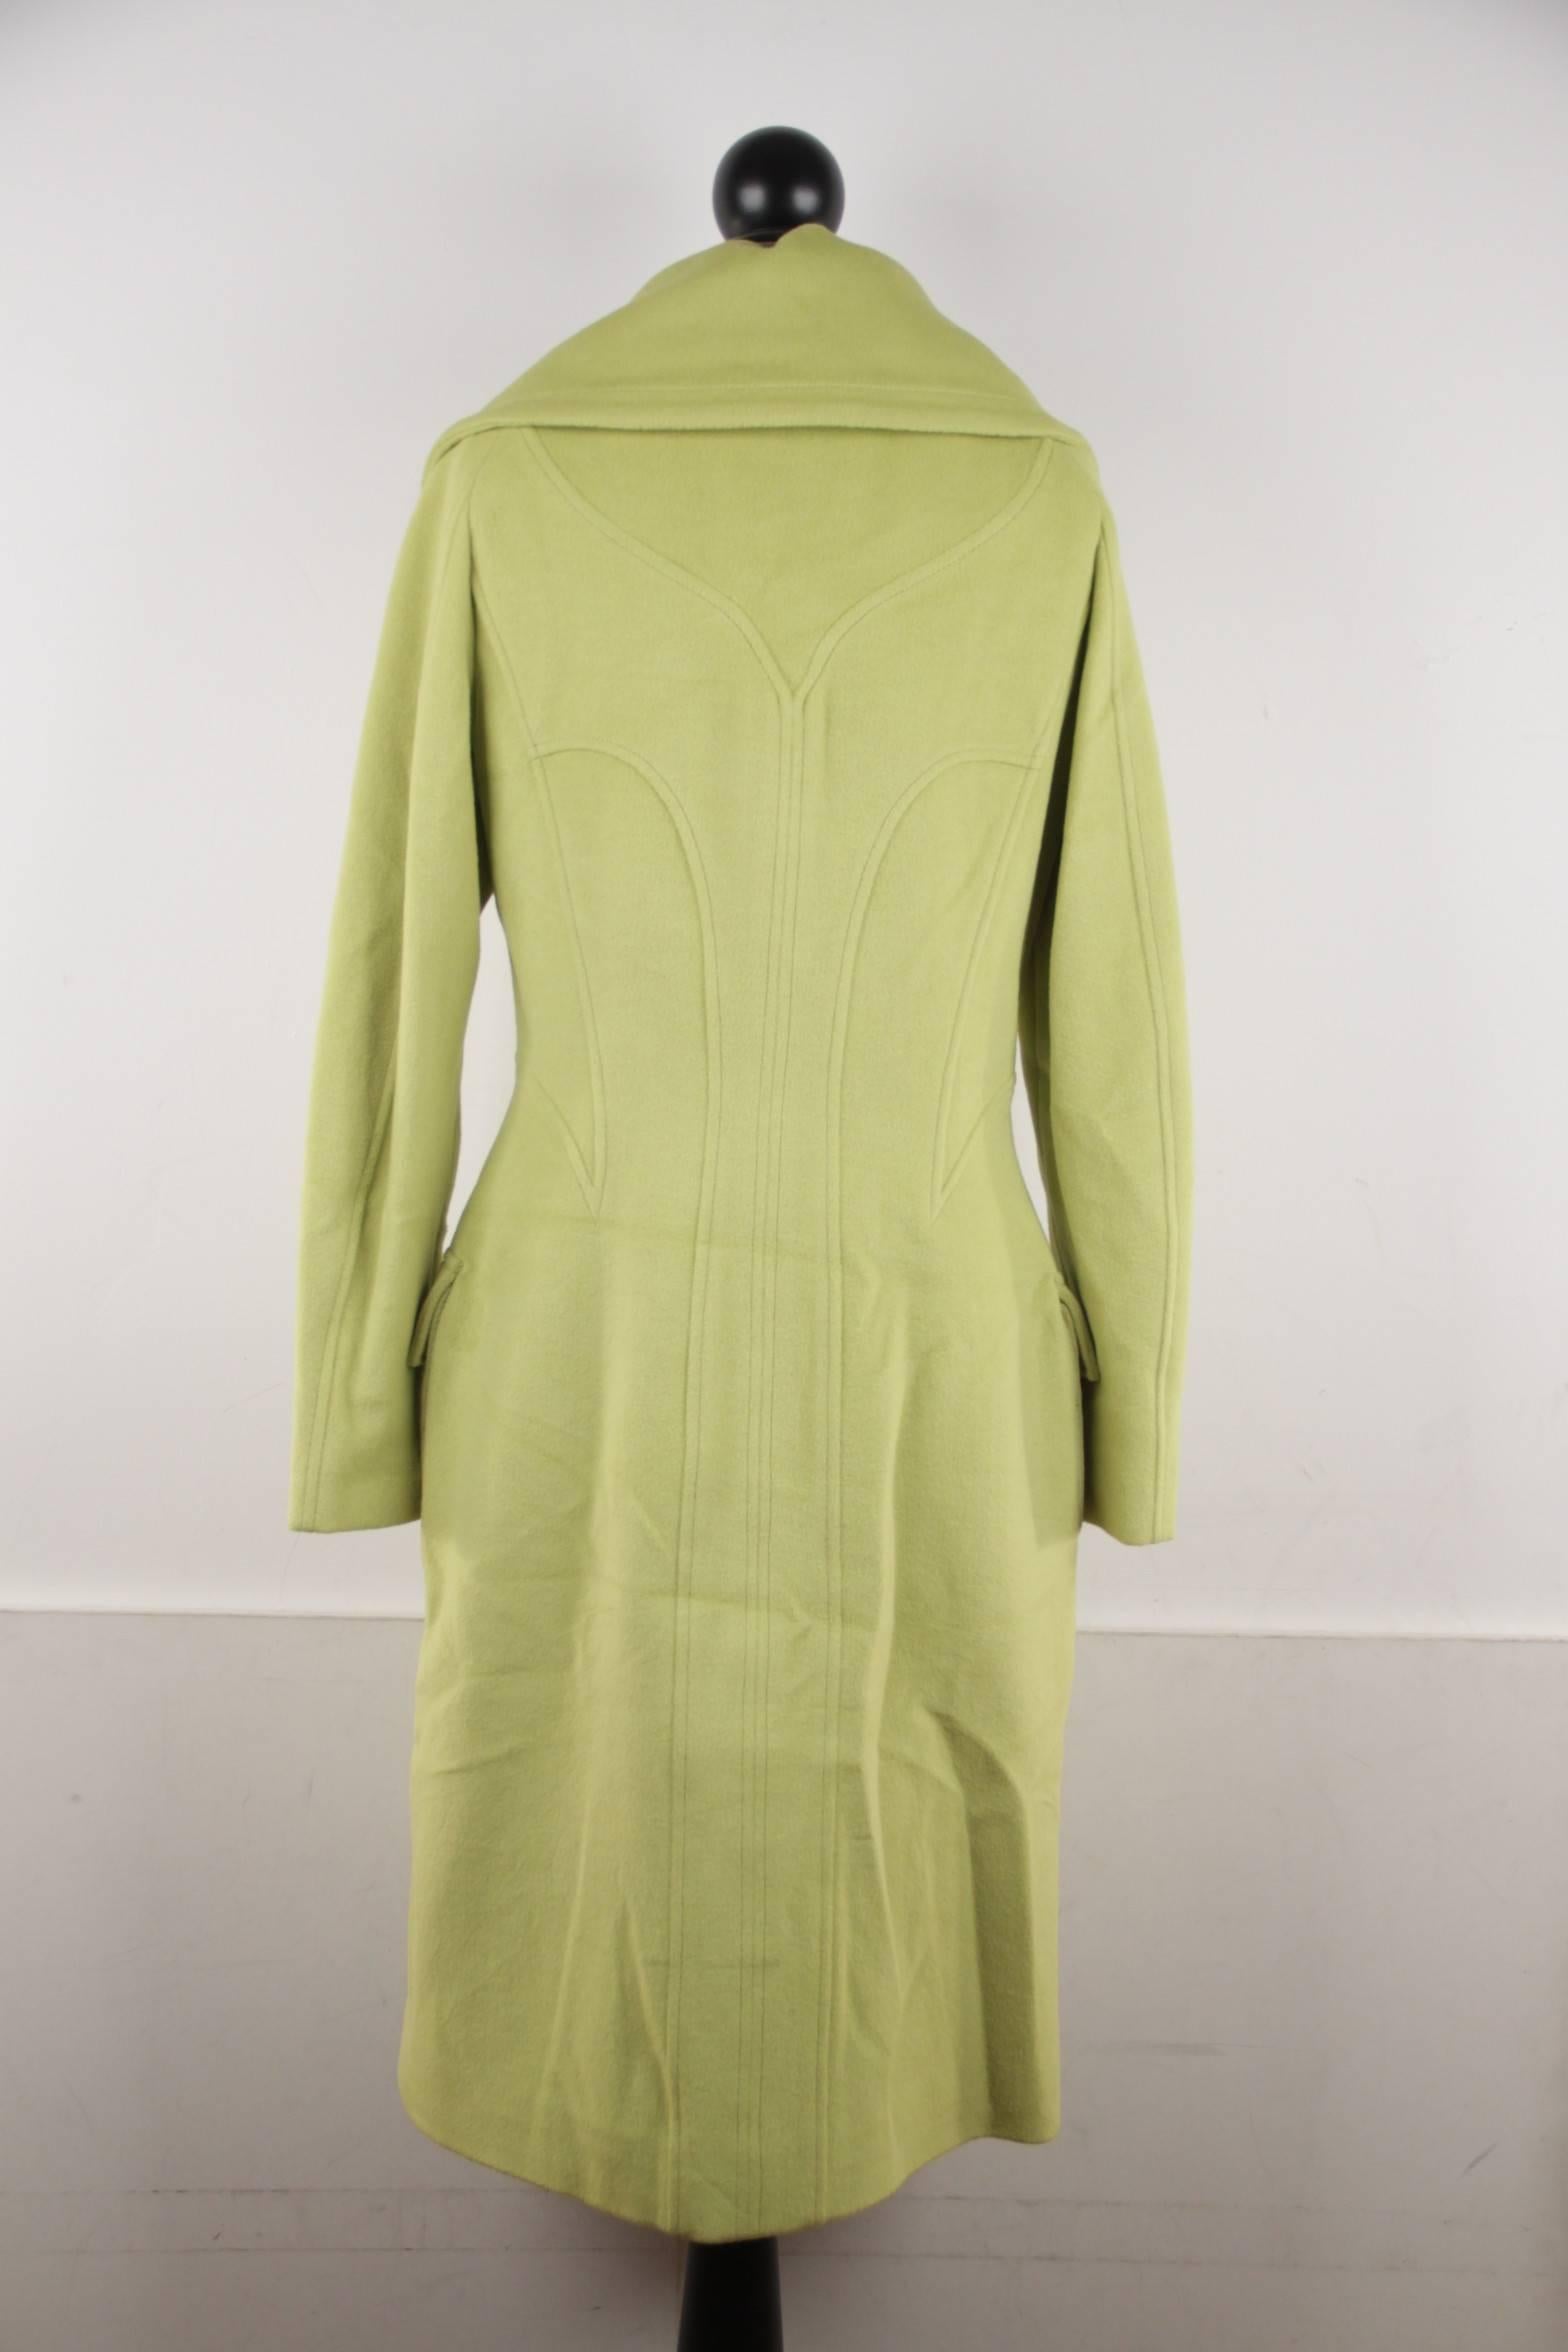 Women's VERSACE  Lime Green Wool Blend COAT Wide Lapels 2005 Fall Collection Sz 40 IT